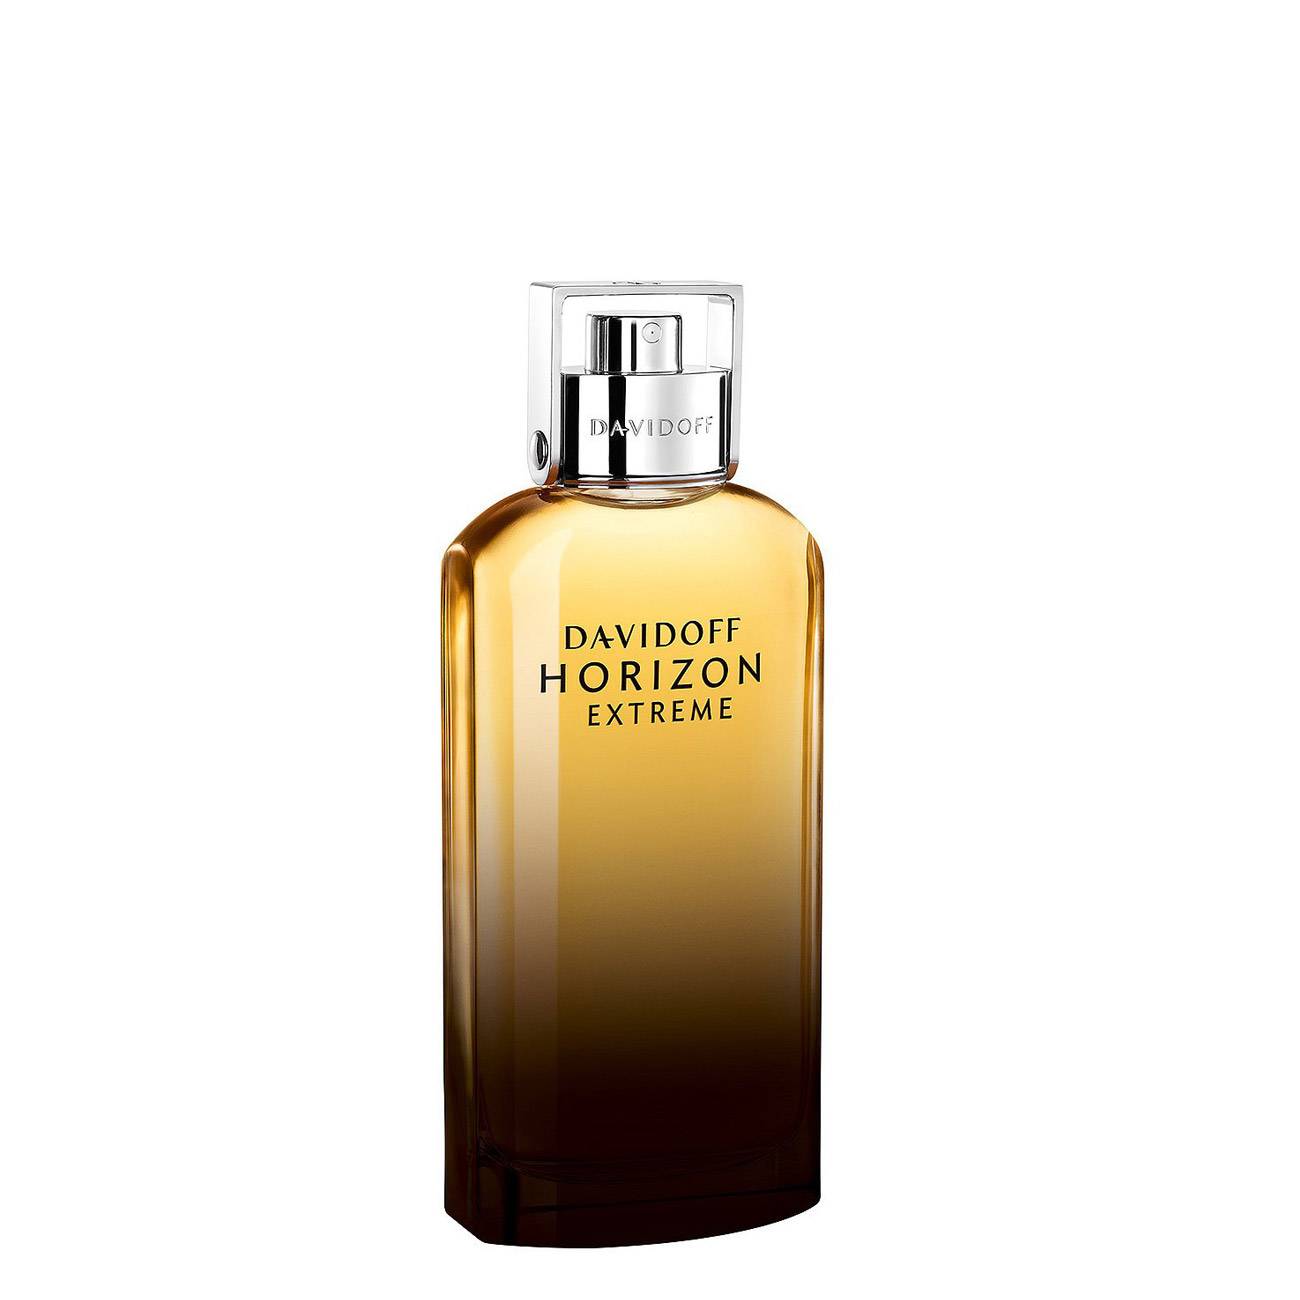 Apa de Parfum Davidoff HORIZON EXTREME 75ml cu comanda online